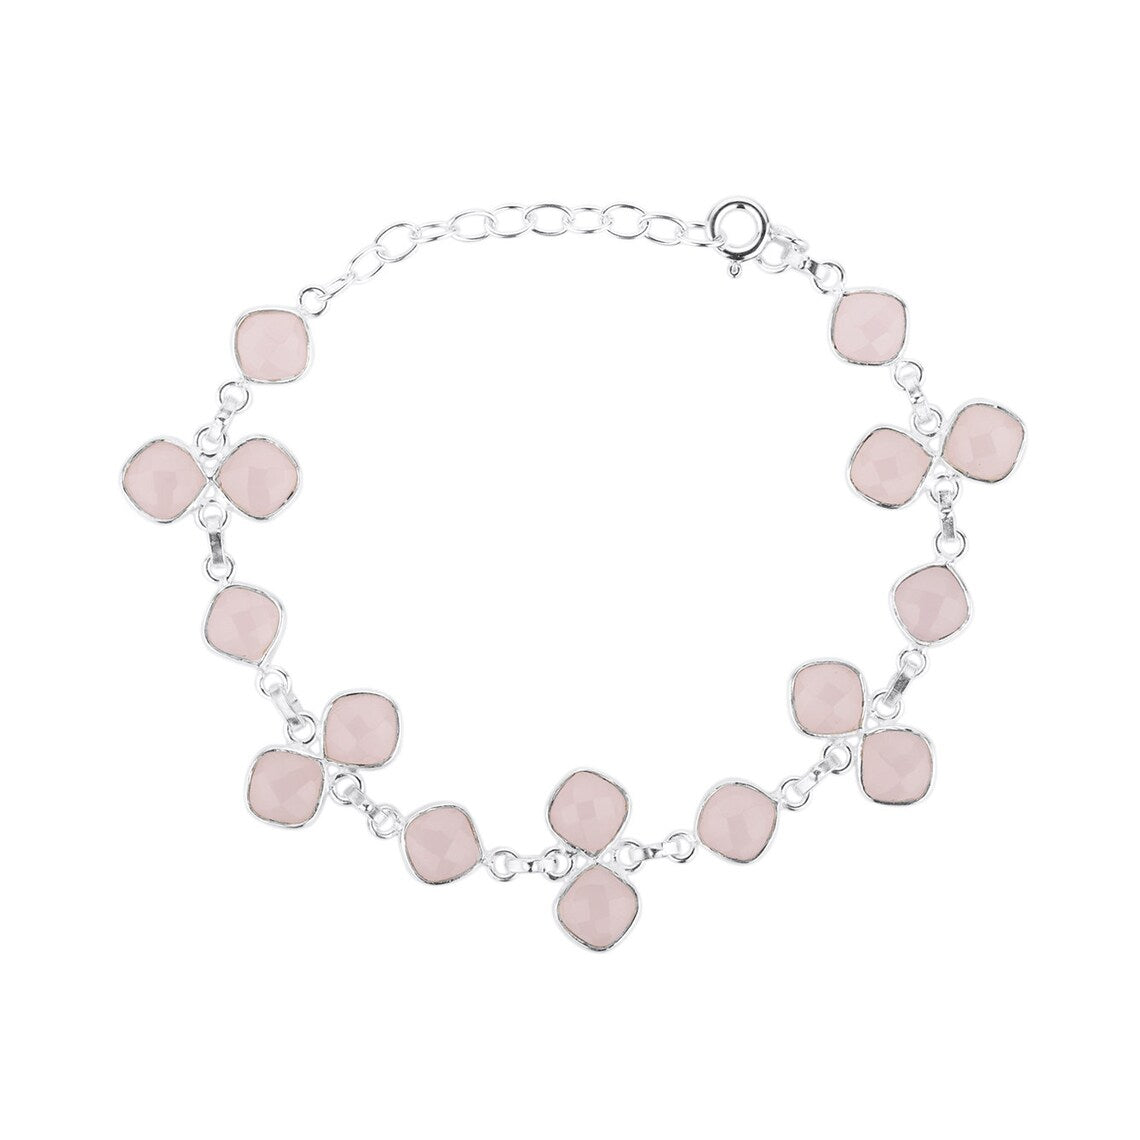 Pink Chalcedony bracelet, October Birthstone bracelet, mothers jewelry, personalized bridesmaid bracelet wife gifts